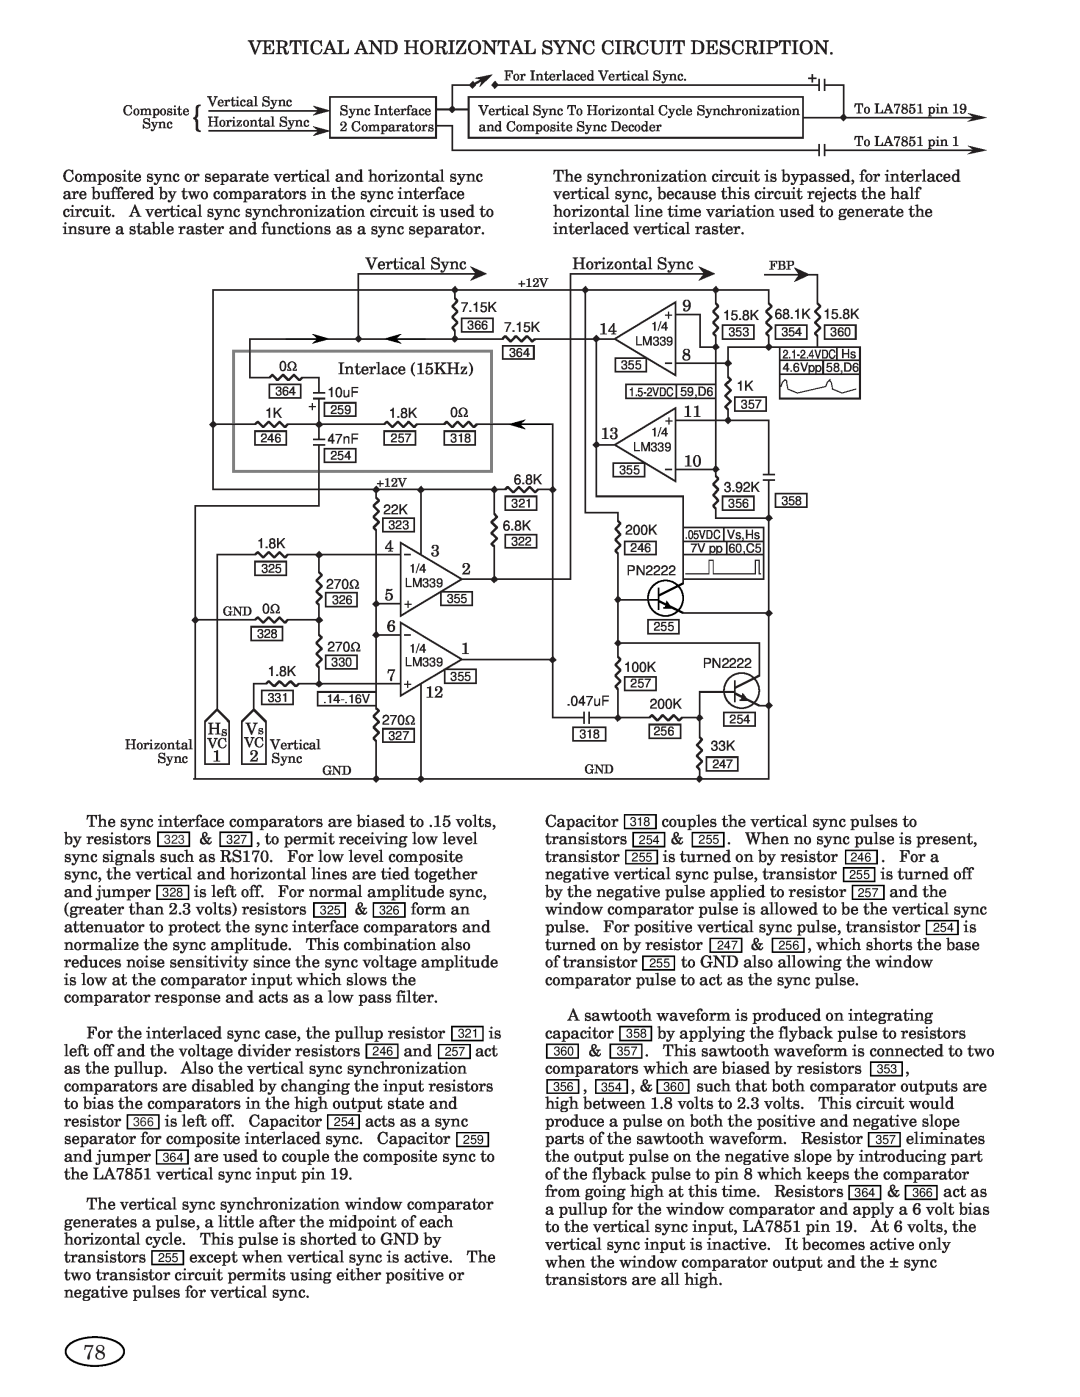 Genius 1993, ISO XFR-75W, 2093, 1493, 2793, 3693, 1793 Vertical And Horizontal Sync Circuit Description, 2.1-2.4VDC Hs, 05VDC 